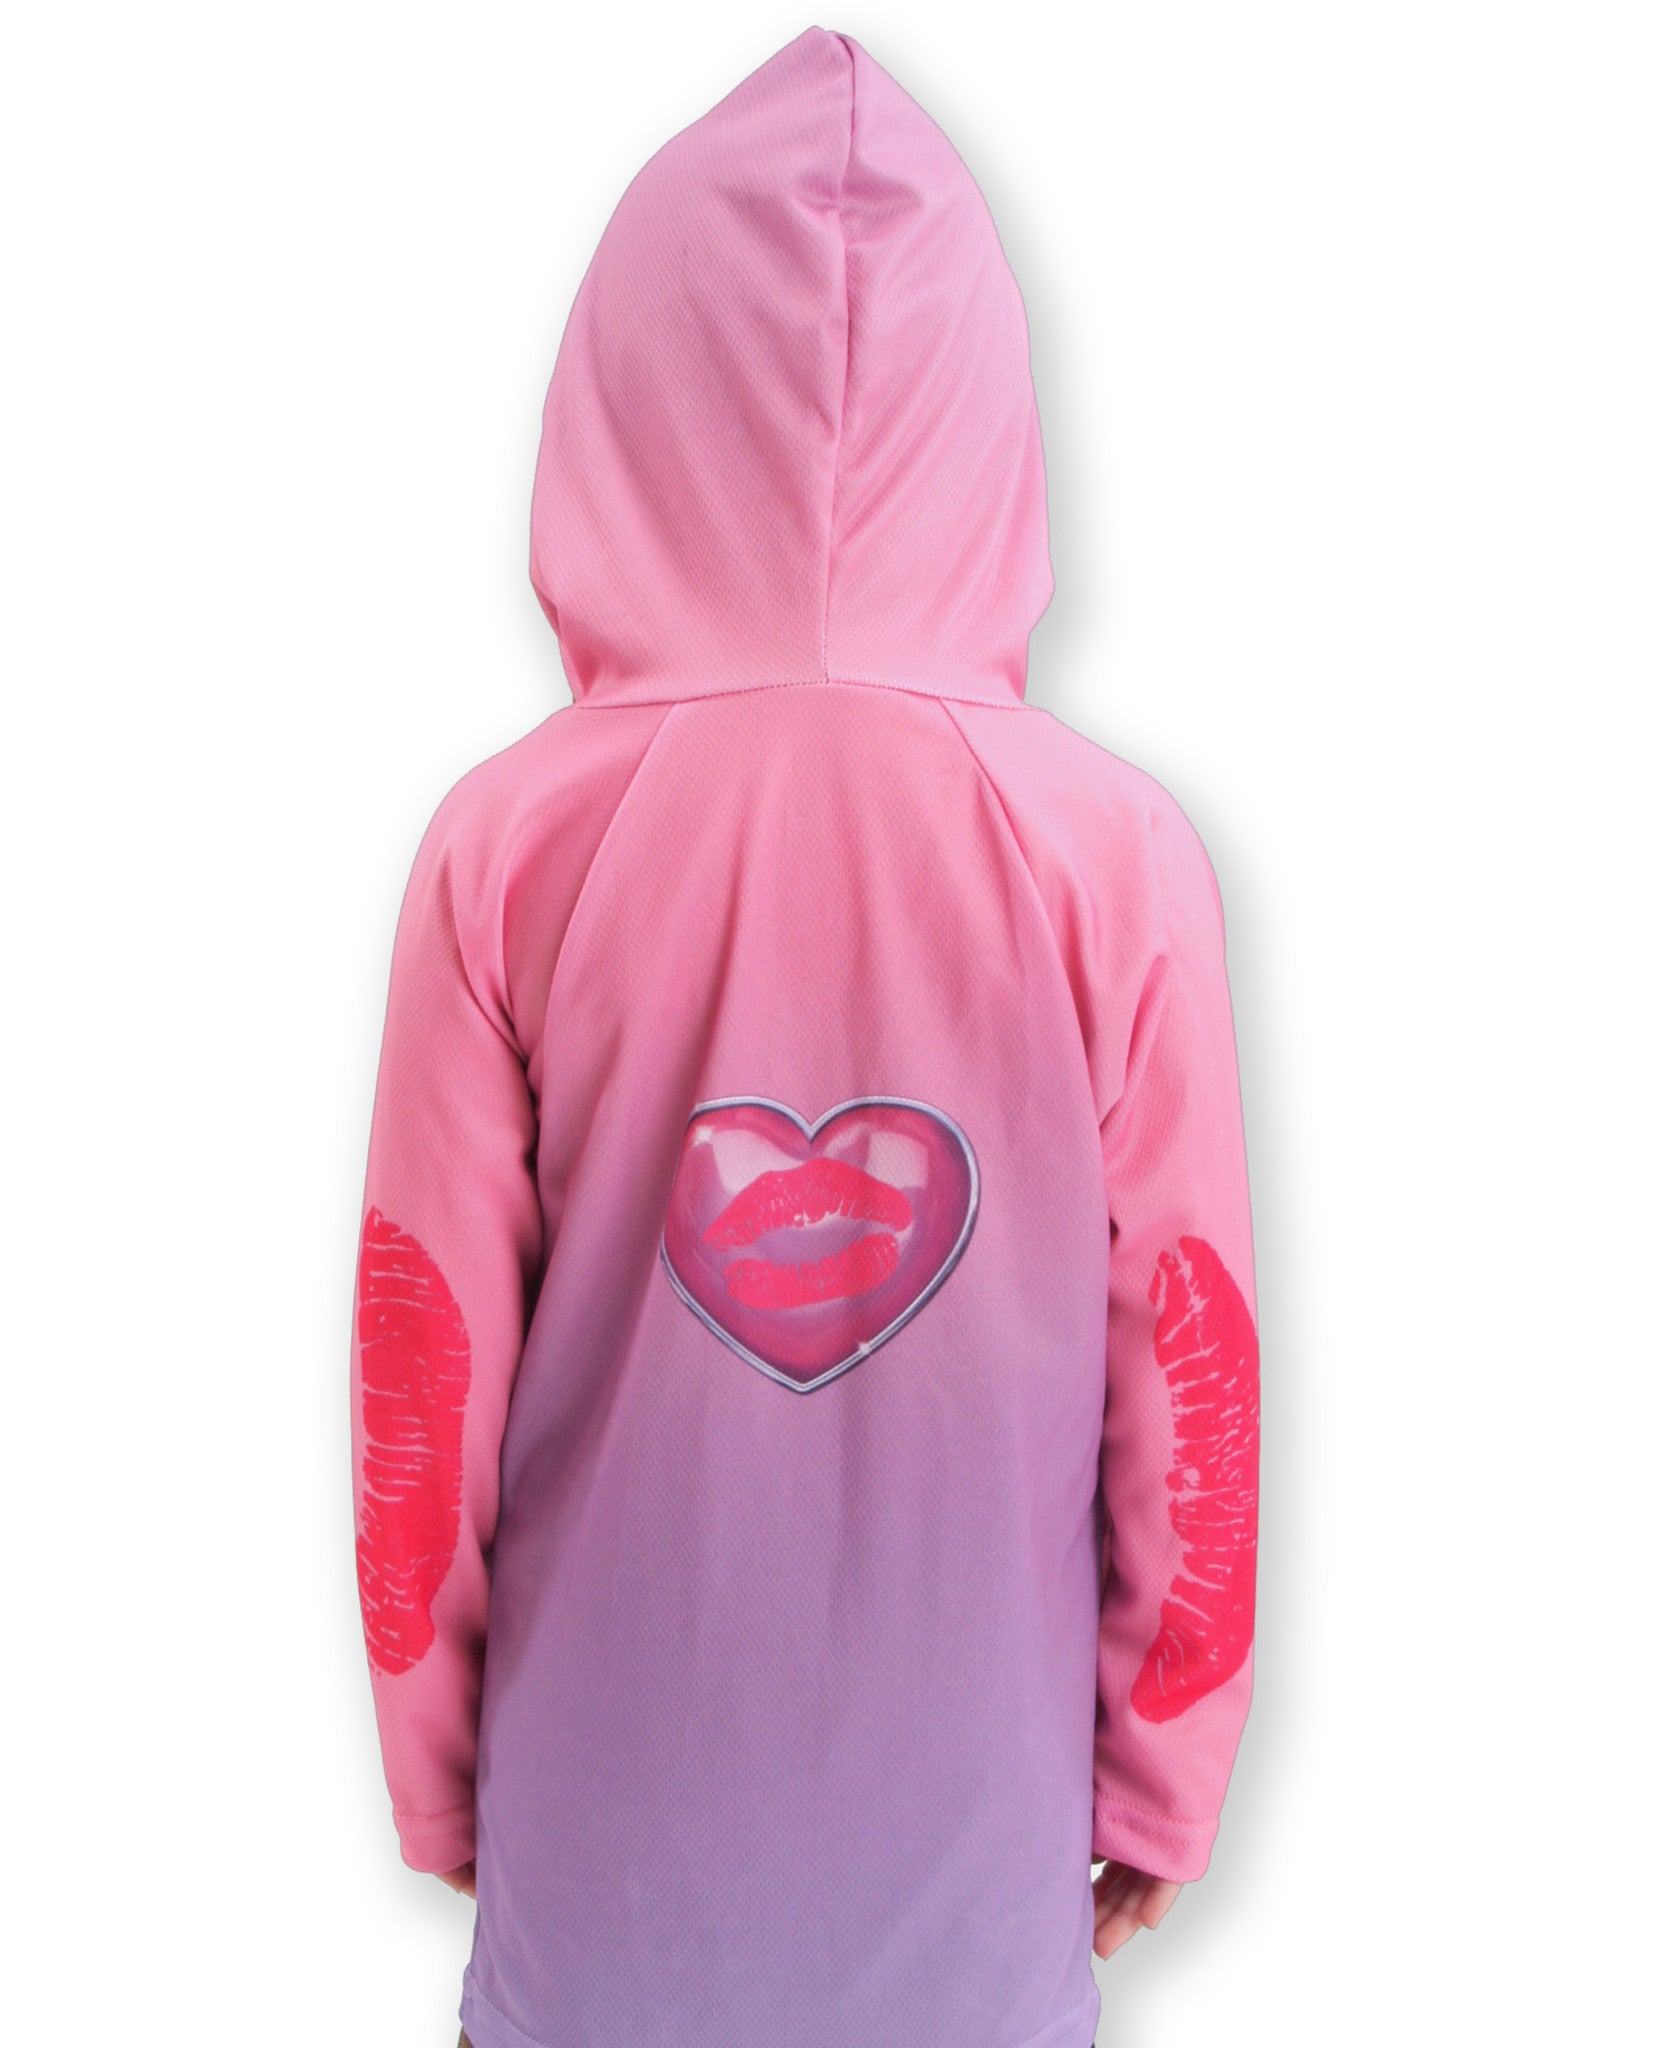 Kiss Lips XOXO Hoodie Shirt by Mouthman for kids/adults- $31.99-$56.99 ...